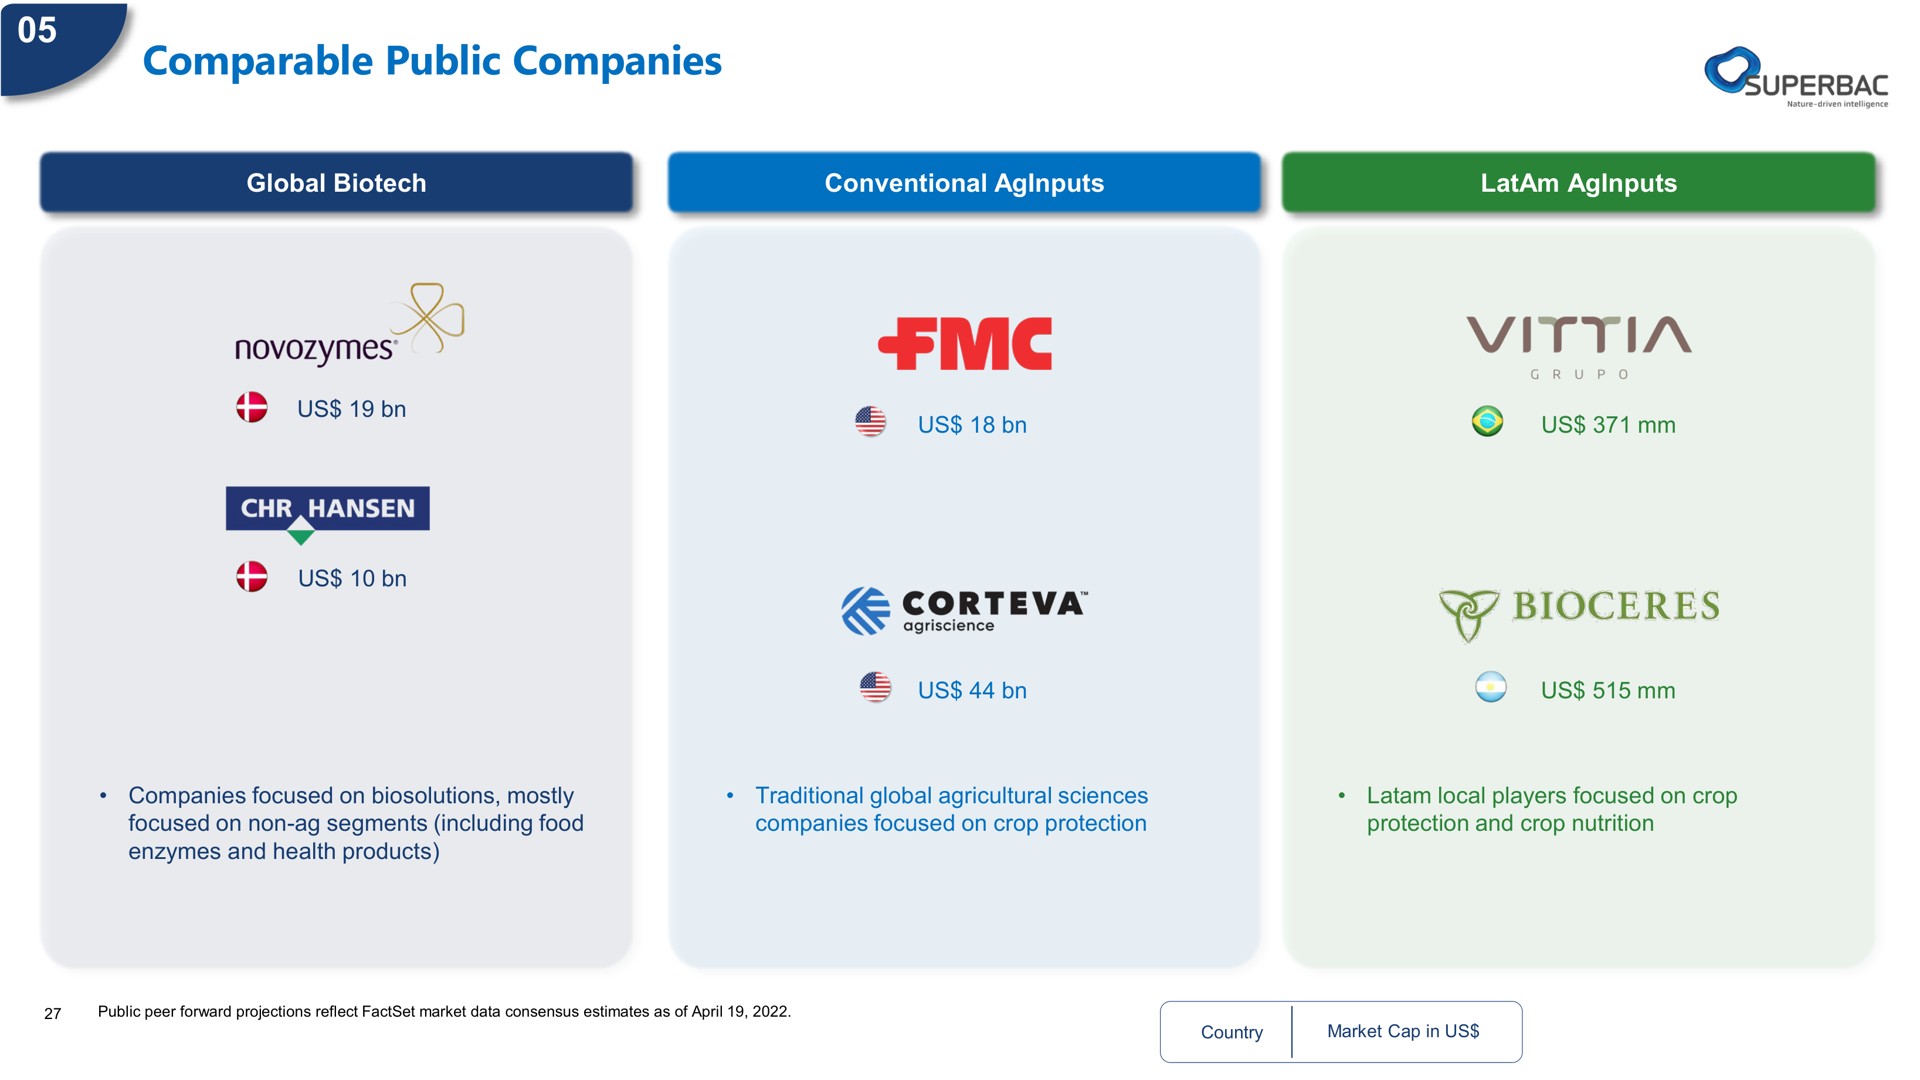 comparable public companies a us us us us us us | Superbac